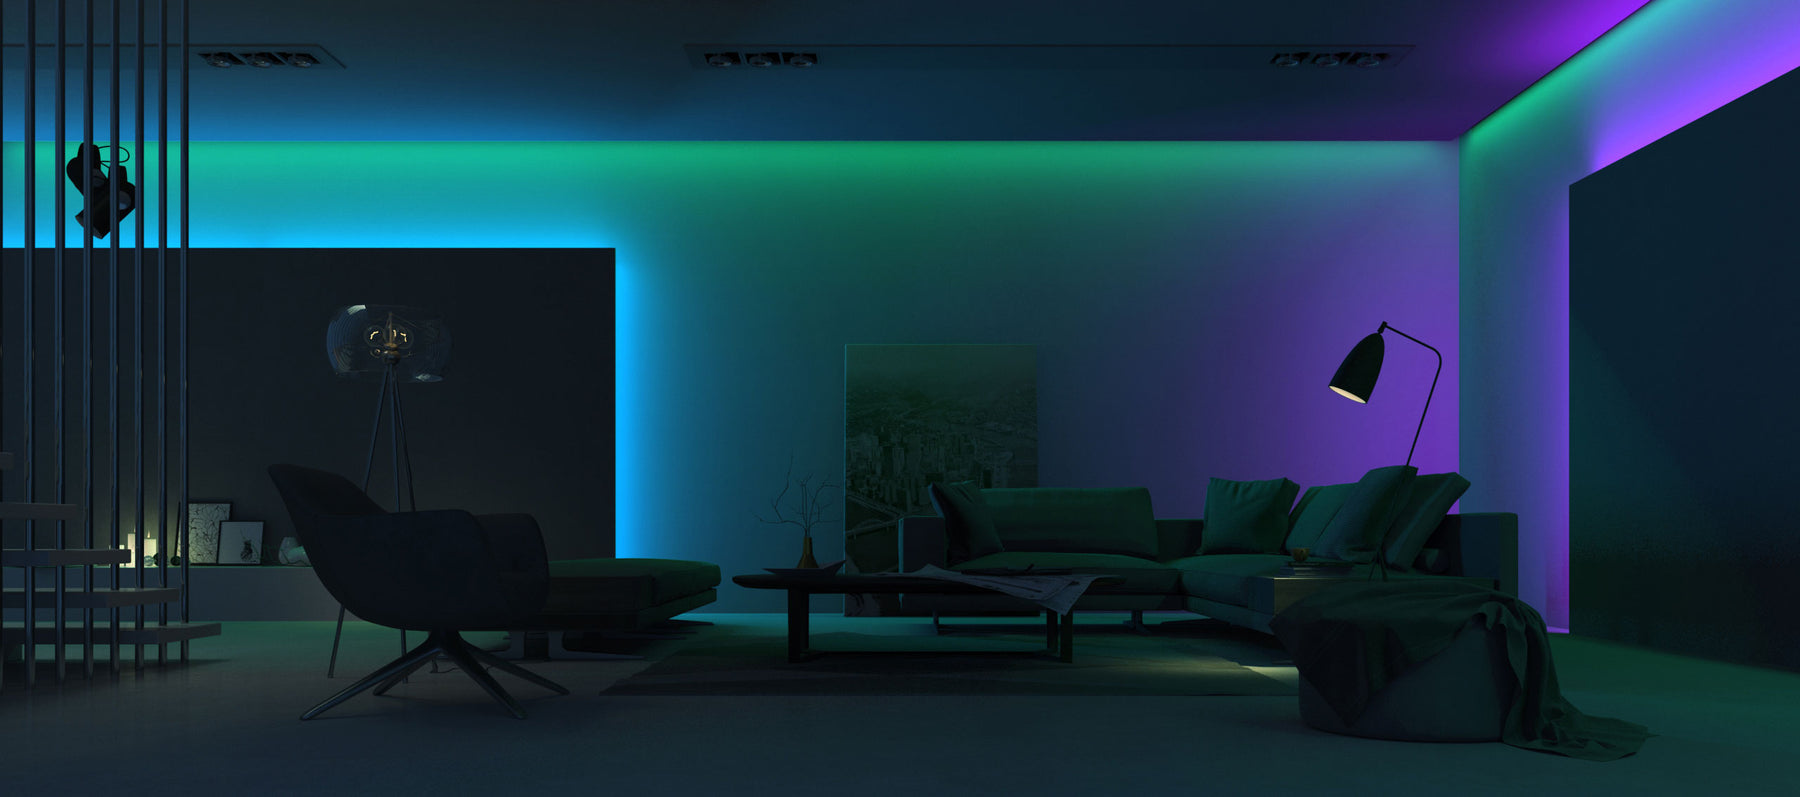 FIBARO RGBW Smart Home Lighting Controller lighting scale